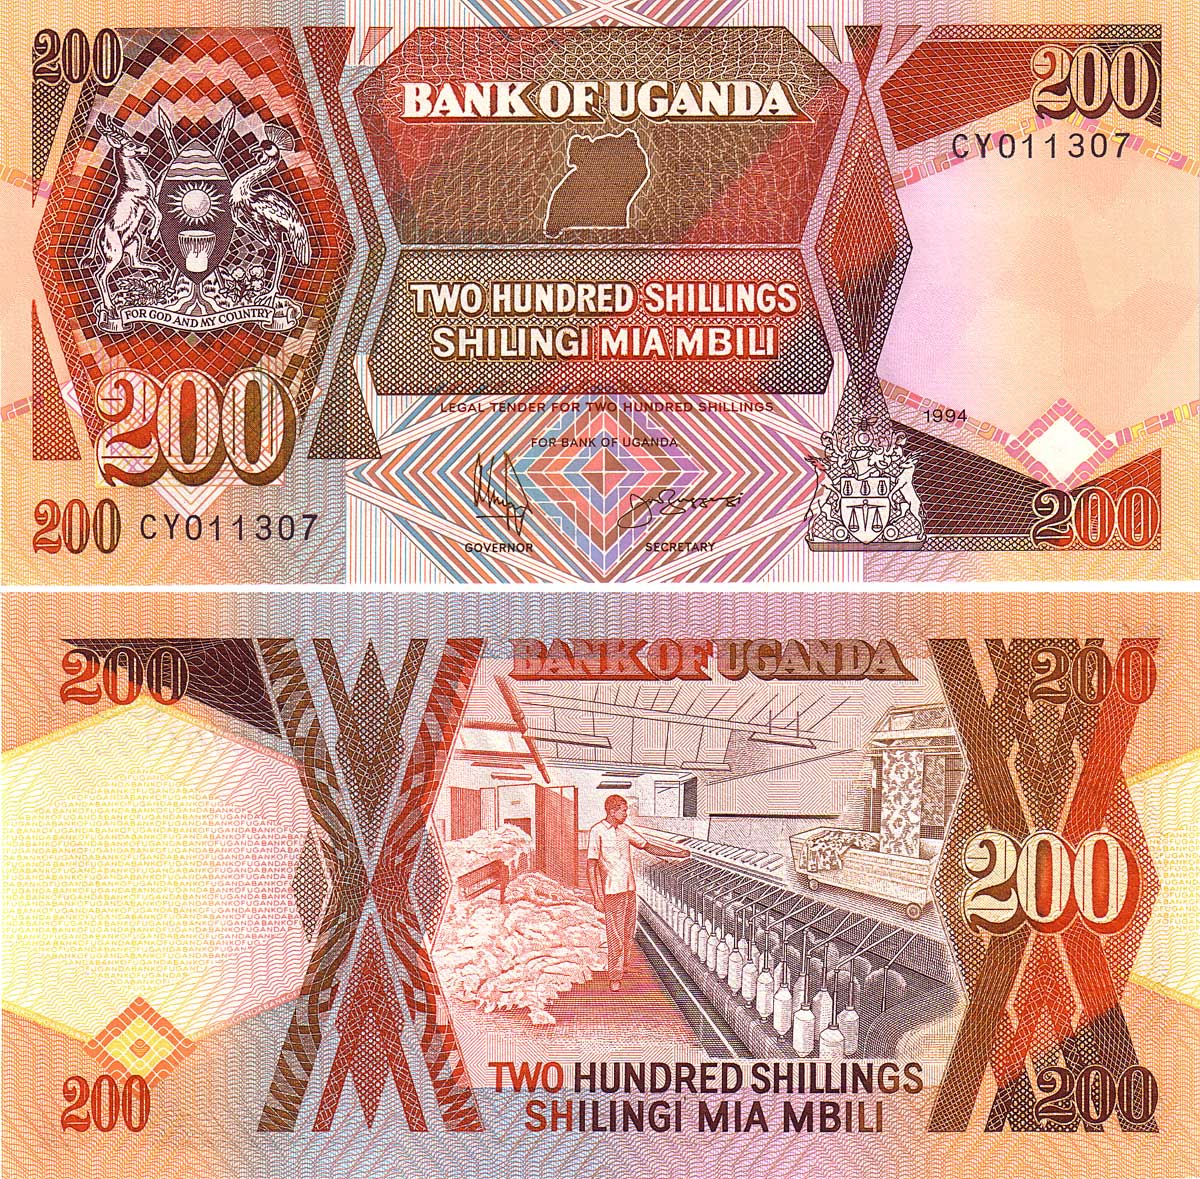 Uganda Currency Notes